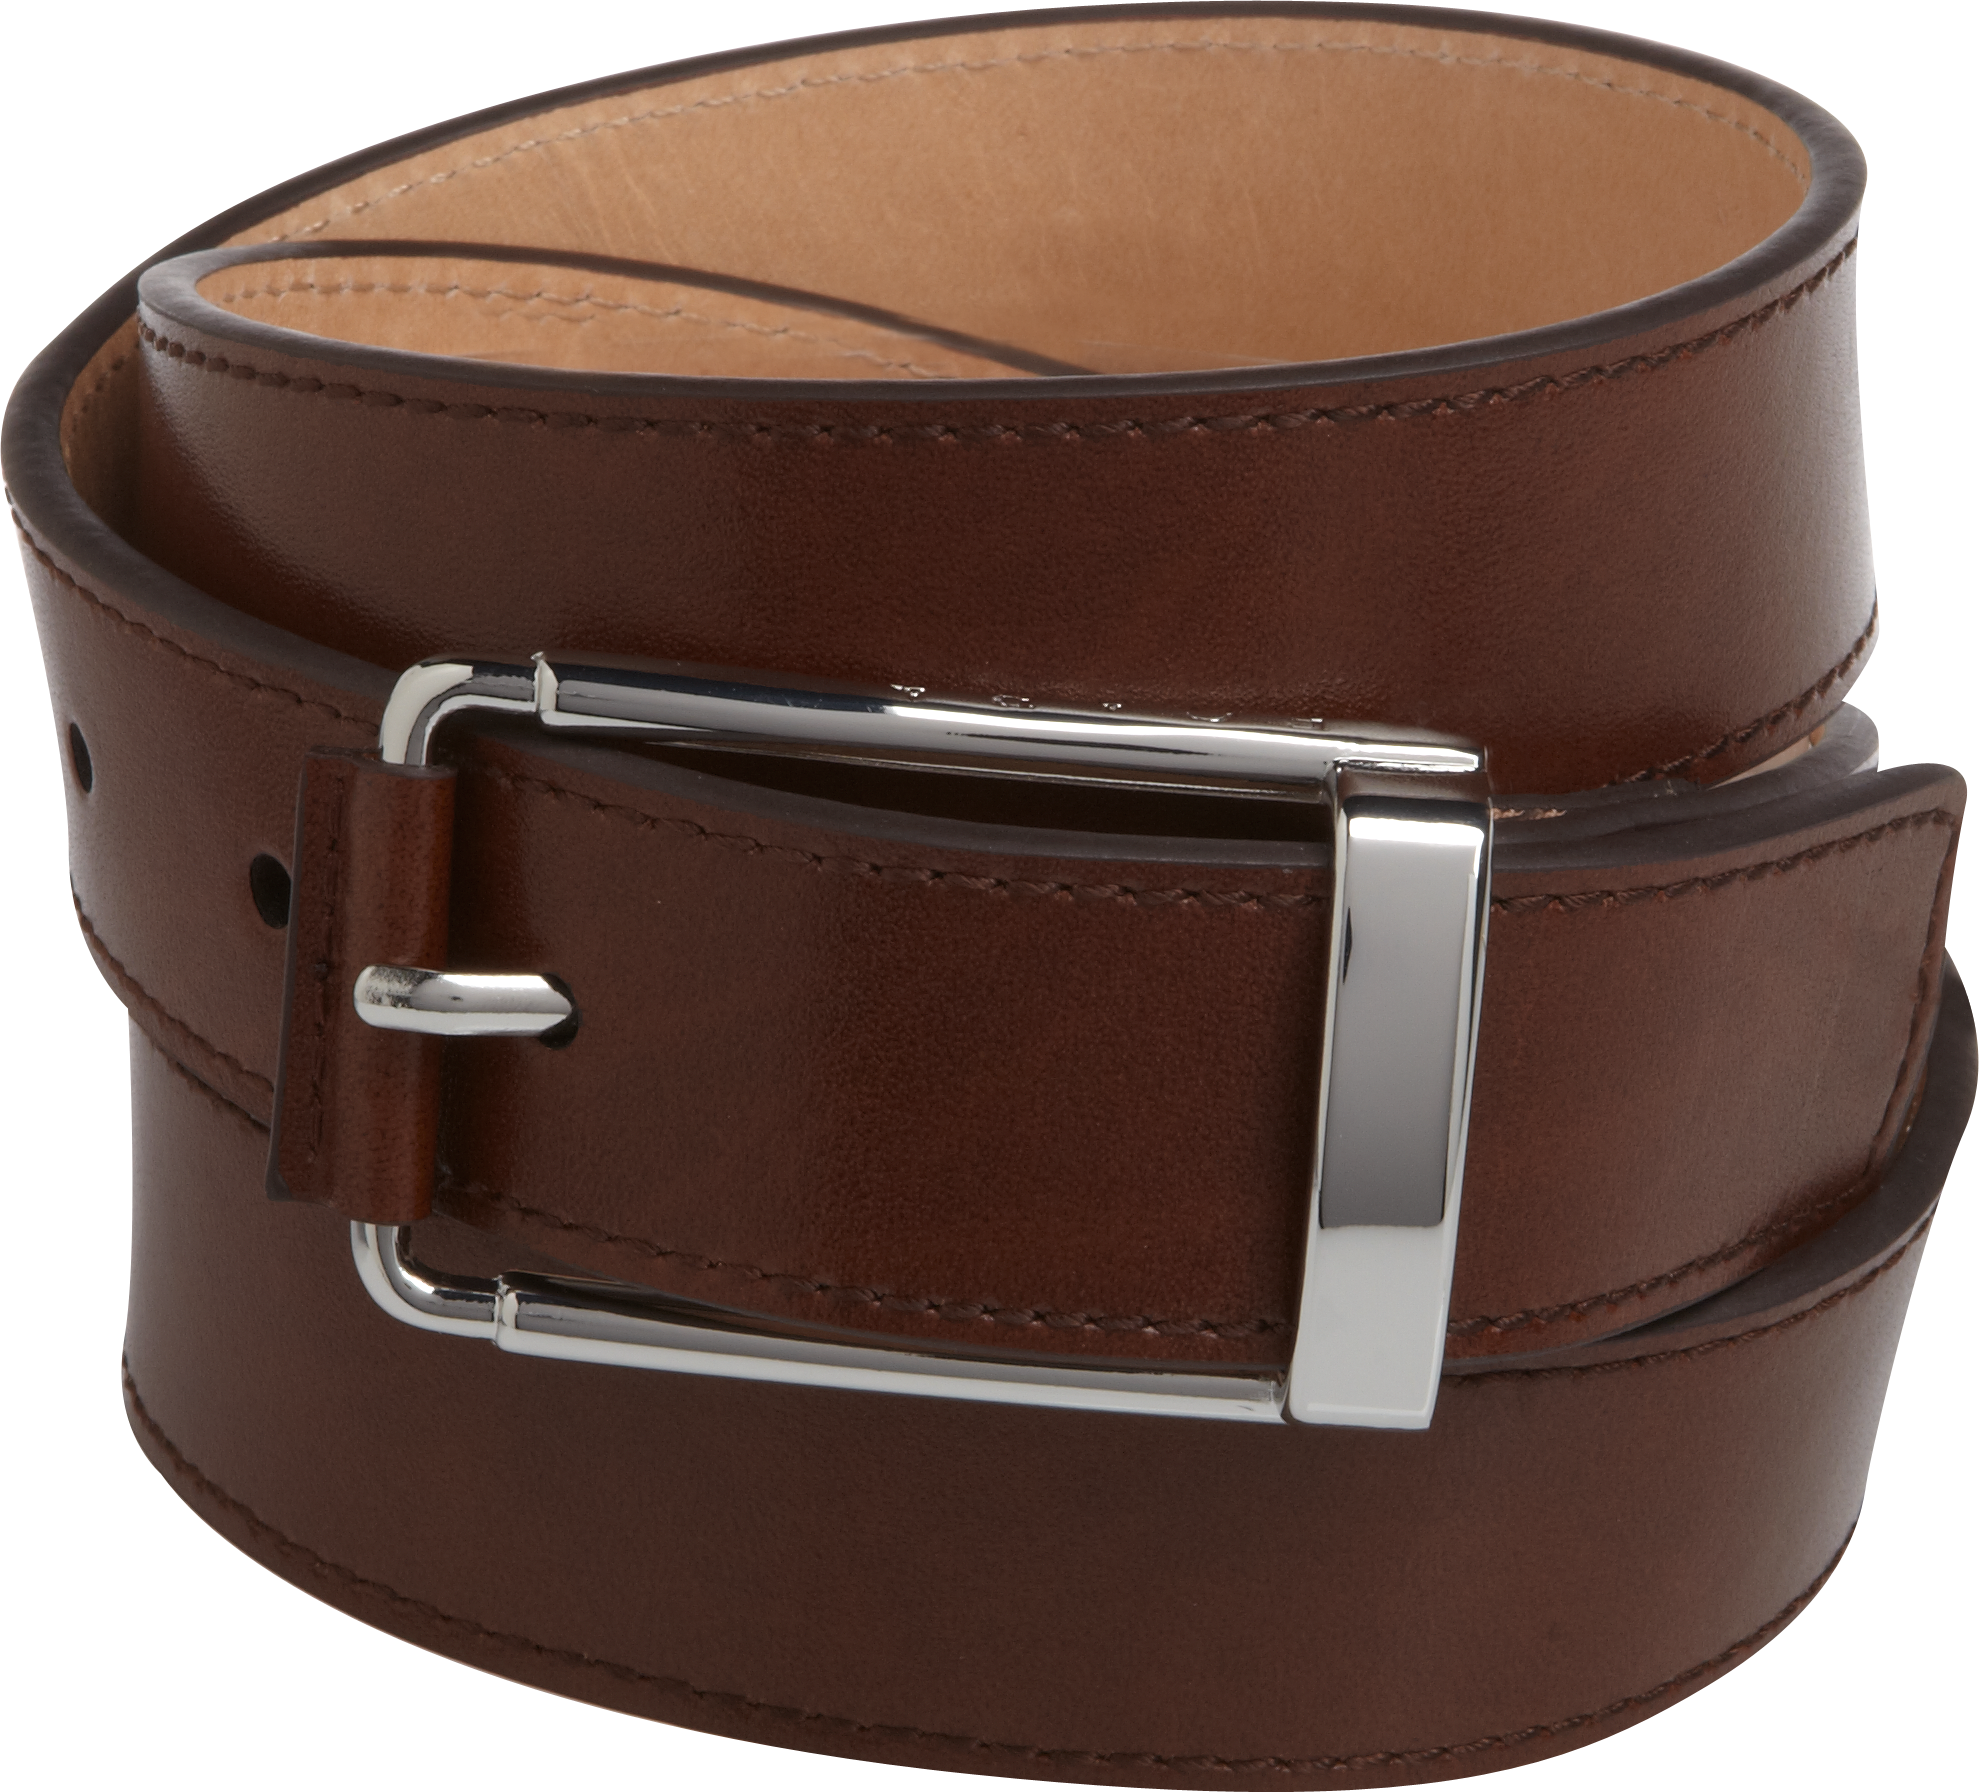 Egara Brown Leather Belt - Men's Sale | Men's Wearhouse